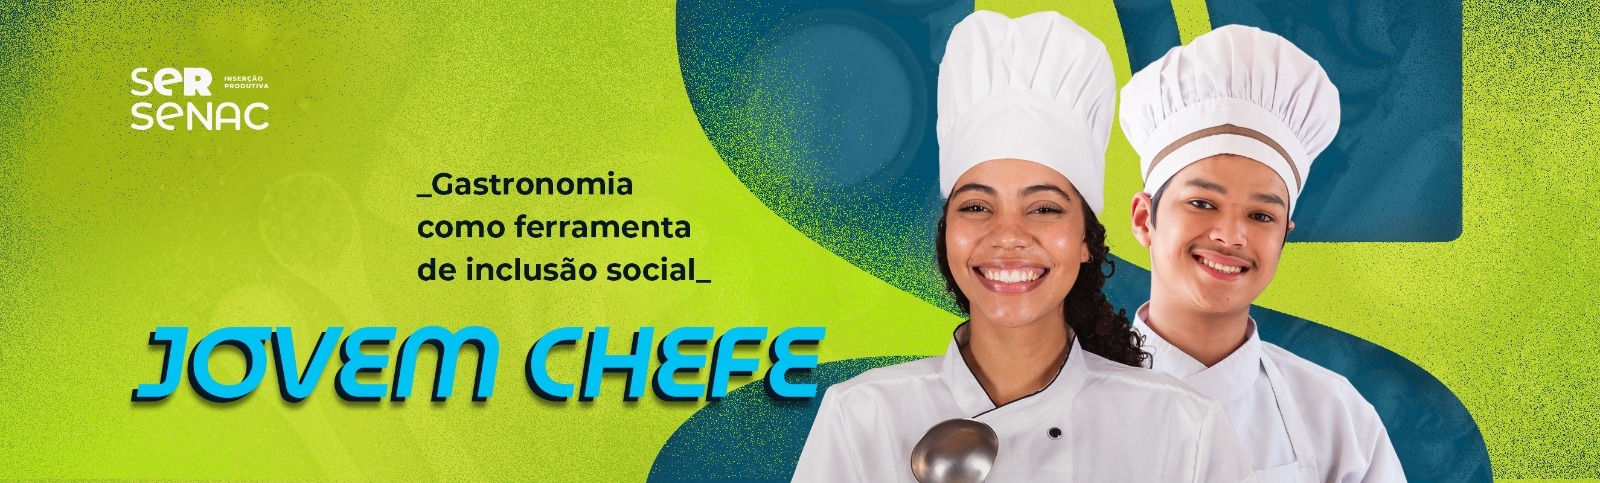 Senac-ES abre vagas gratuitas curso de gastronomia pelo Programa Jovem Chef